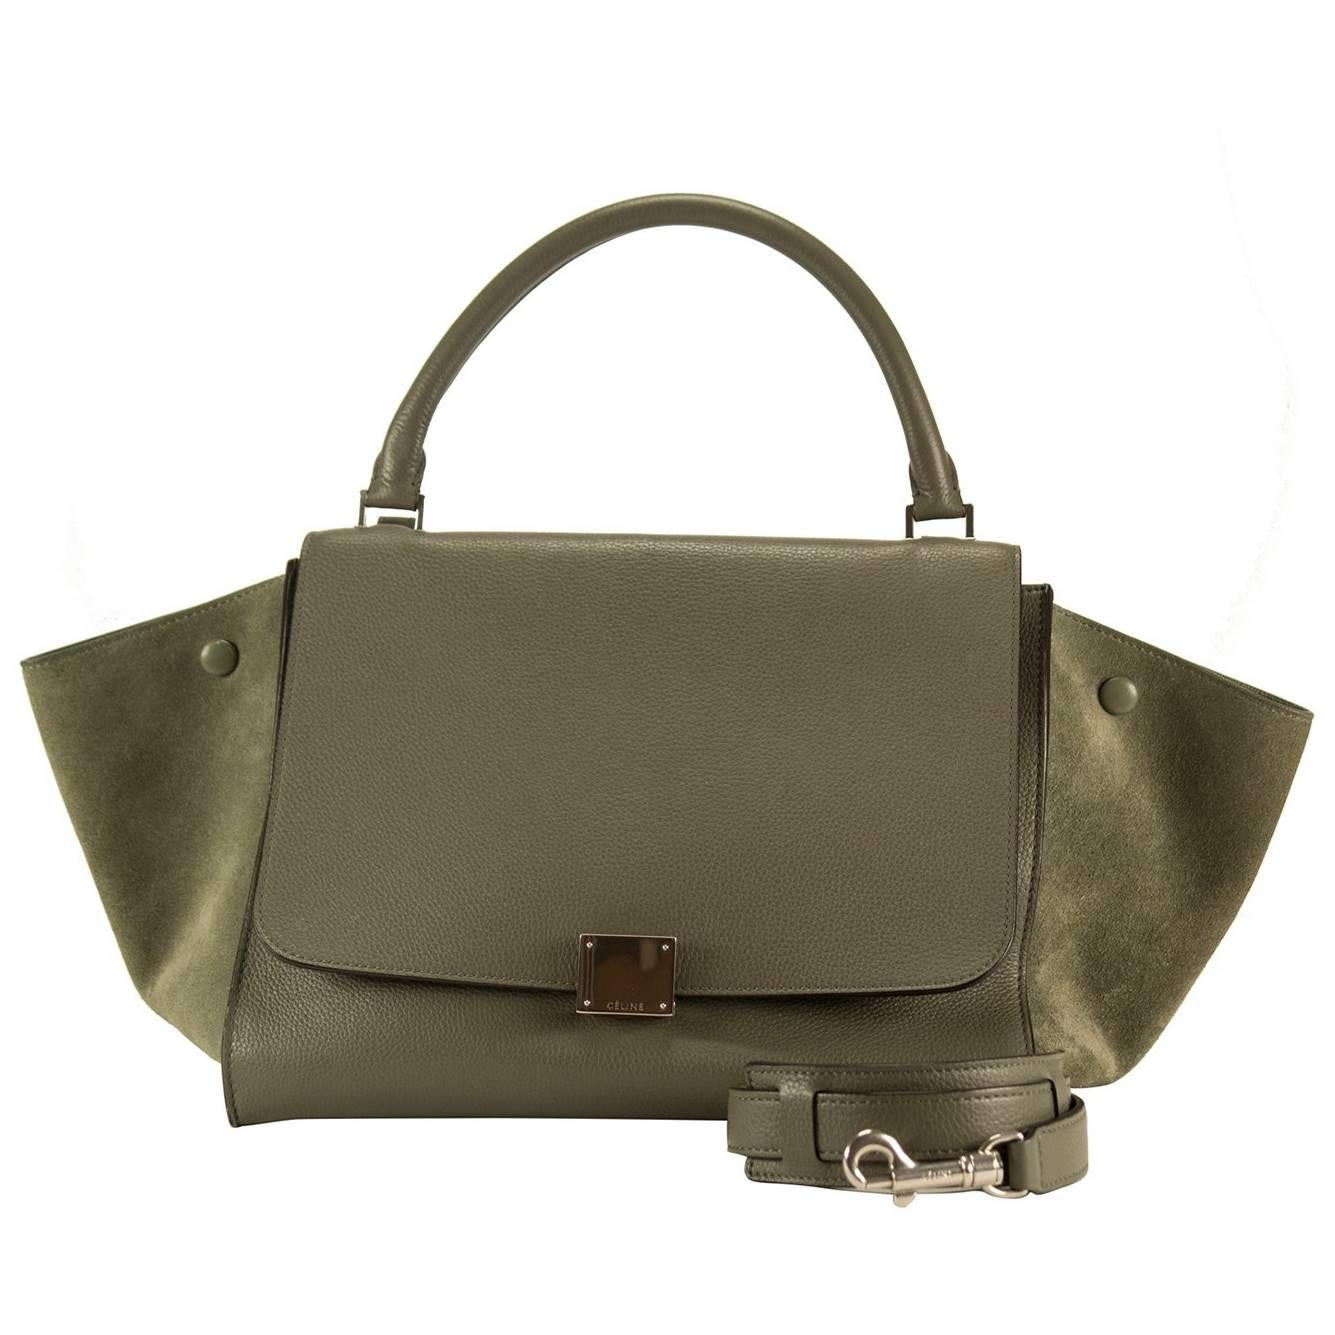 Celine Handbag Trapeze Long Strap Grey Color 2013. For Sale